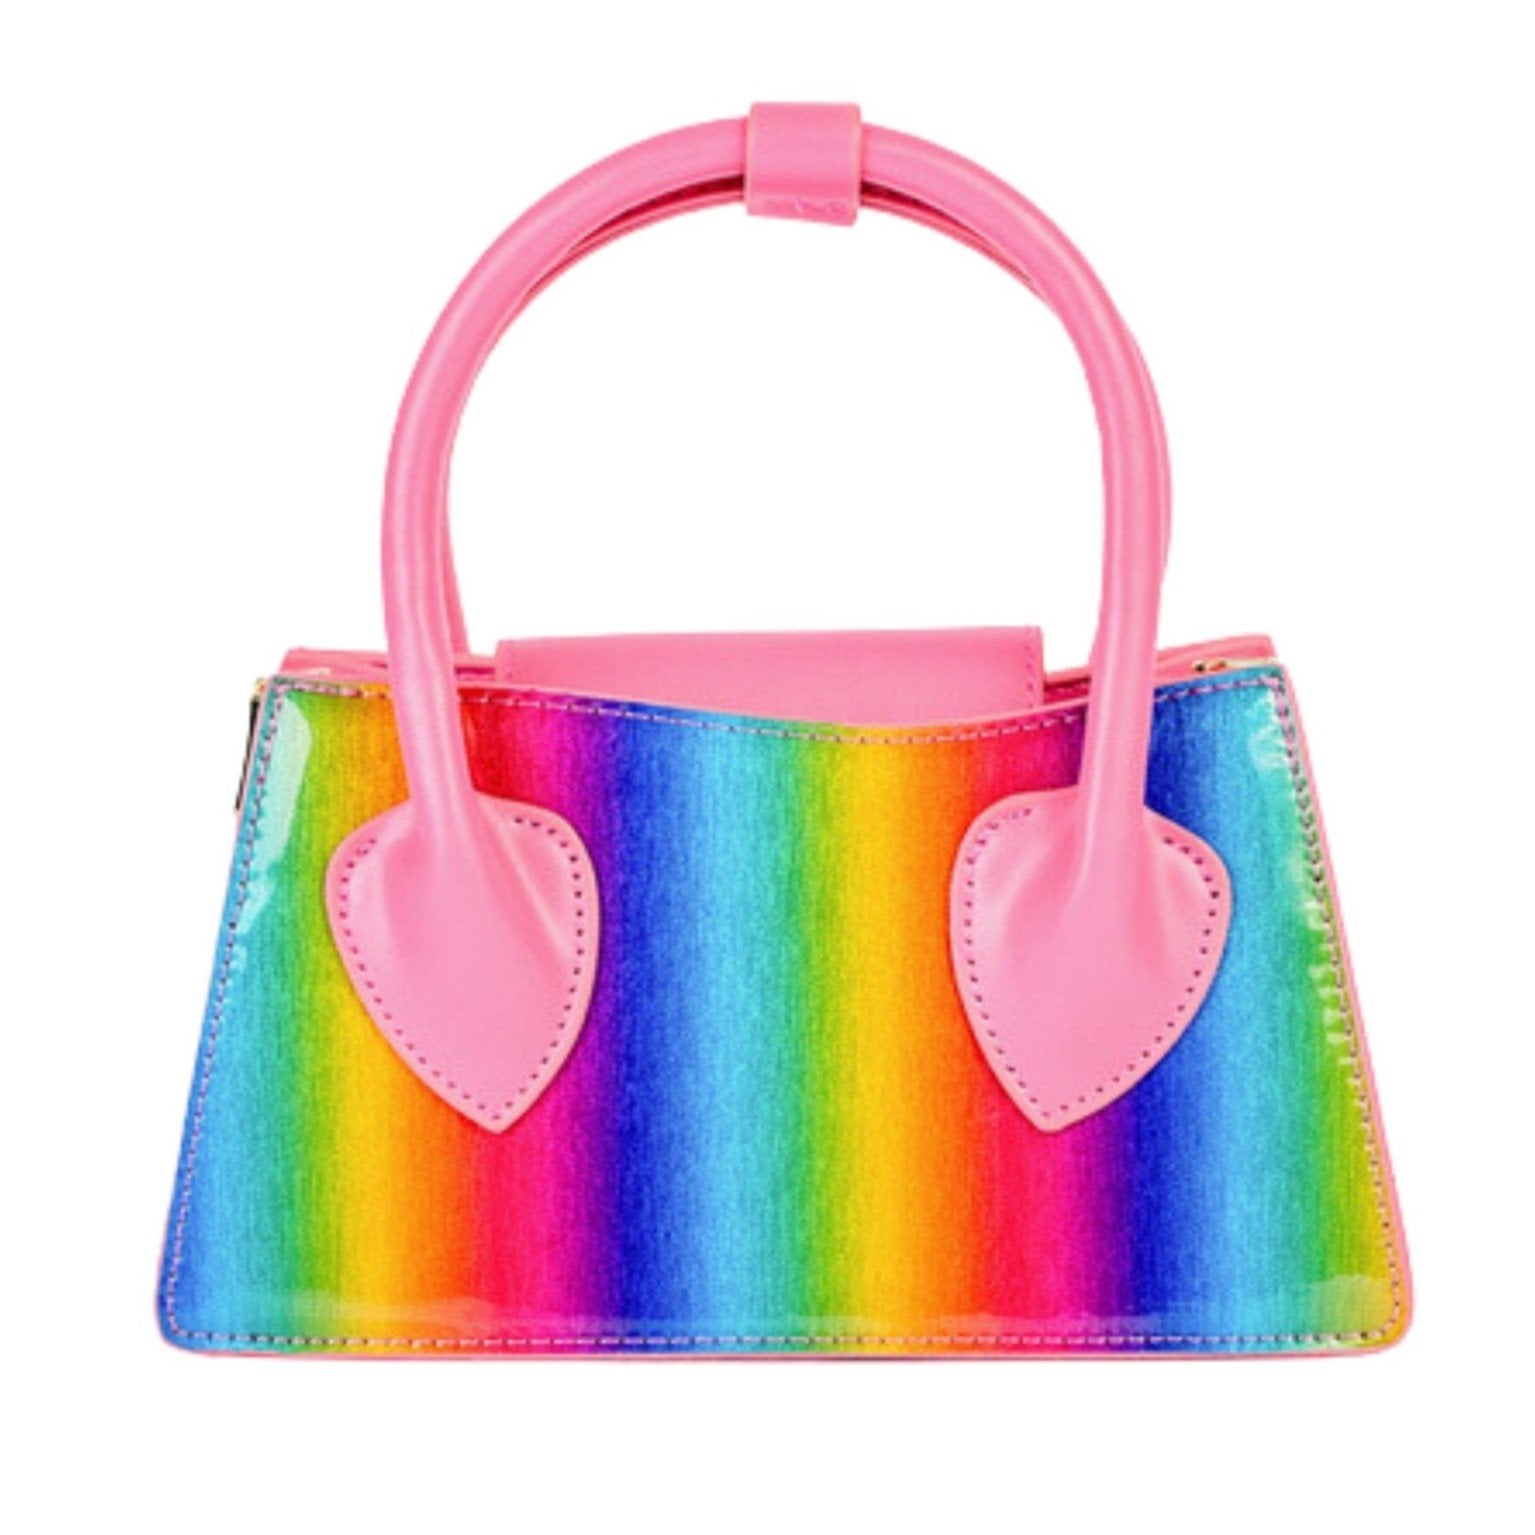 Monster High Color Me Purse Bag Clutch Accessory | eBay